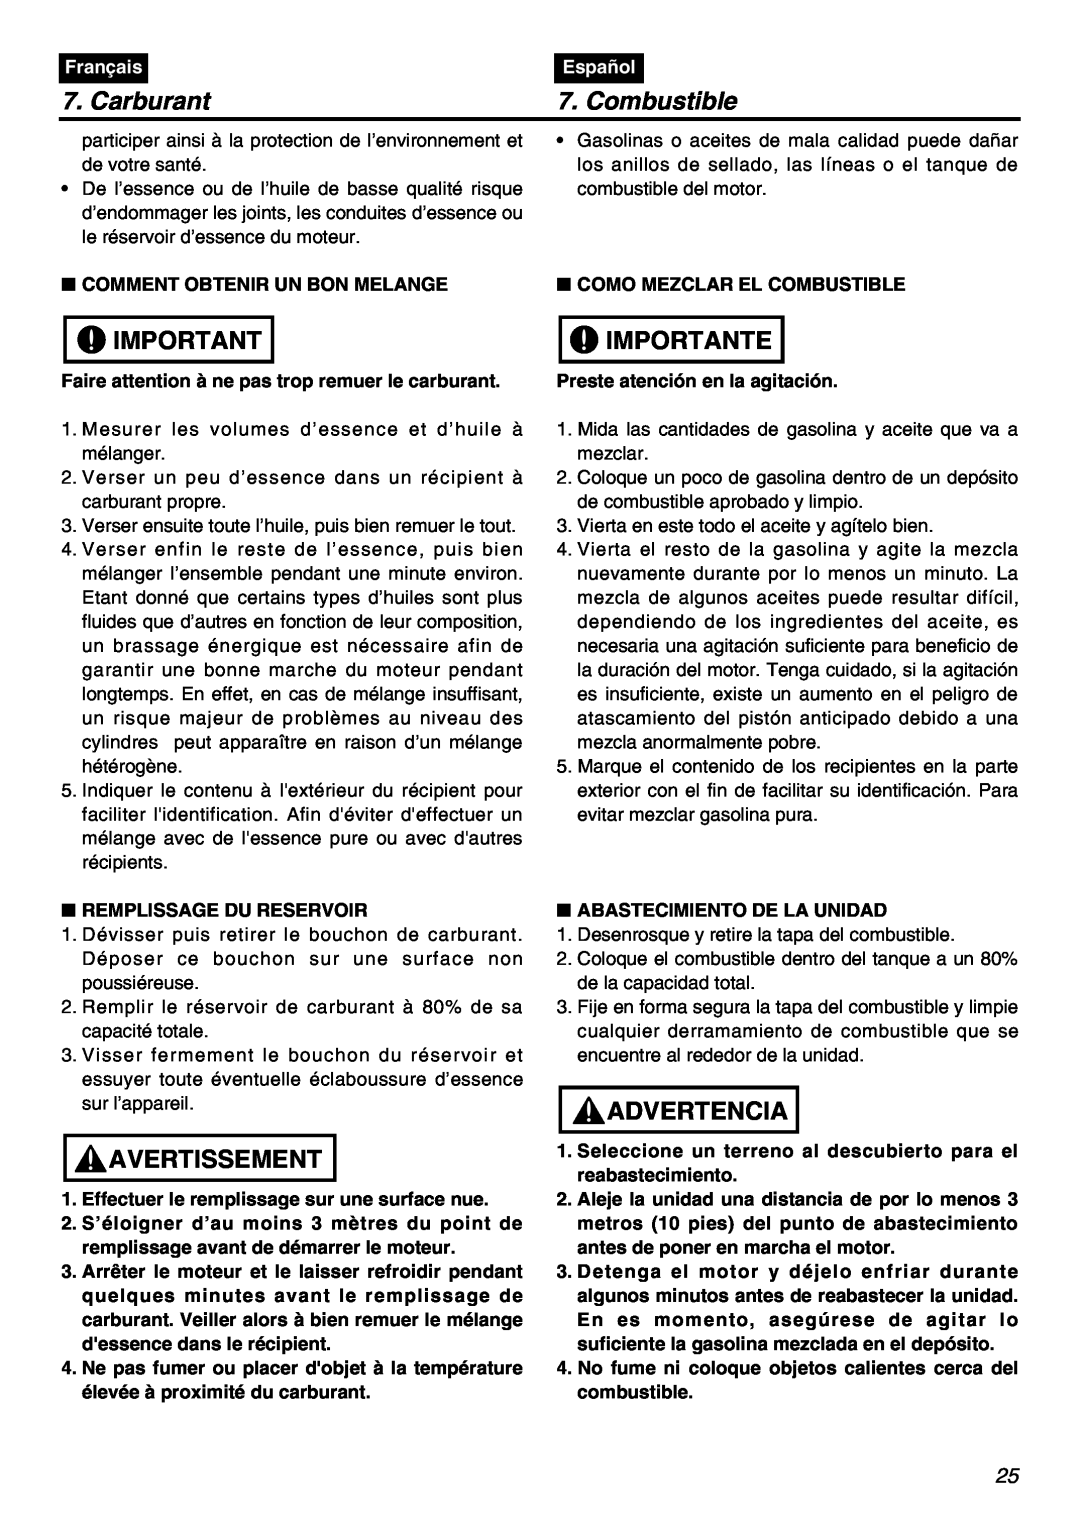 RedMax EBZ8001RH manual Carburant, Combustible, Importante, Avertissement, Advertencia, Français, Español 